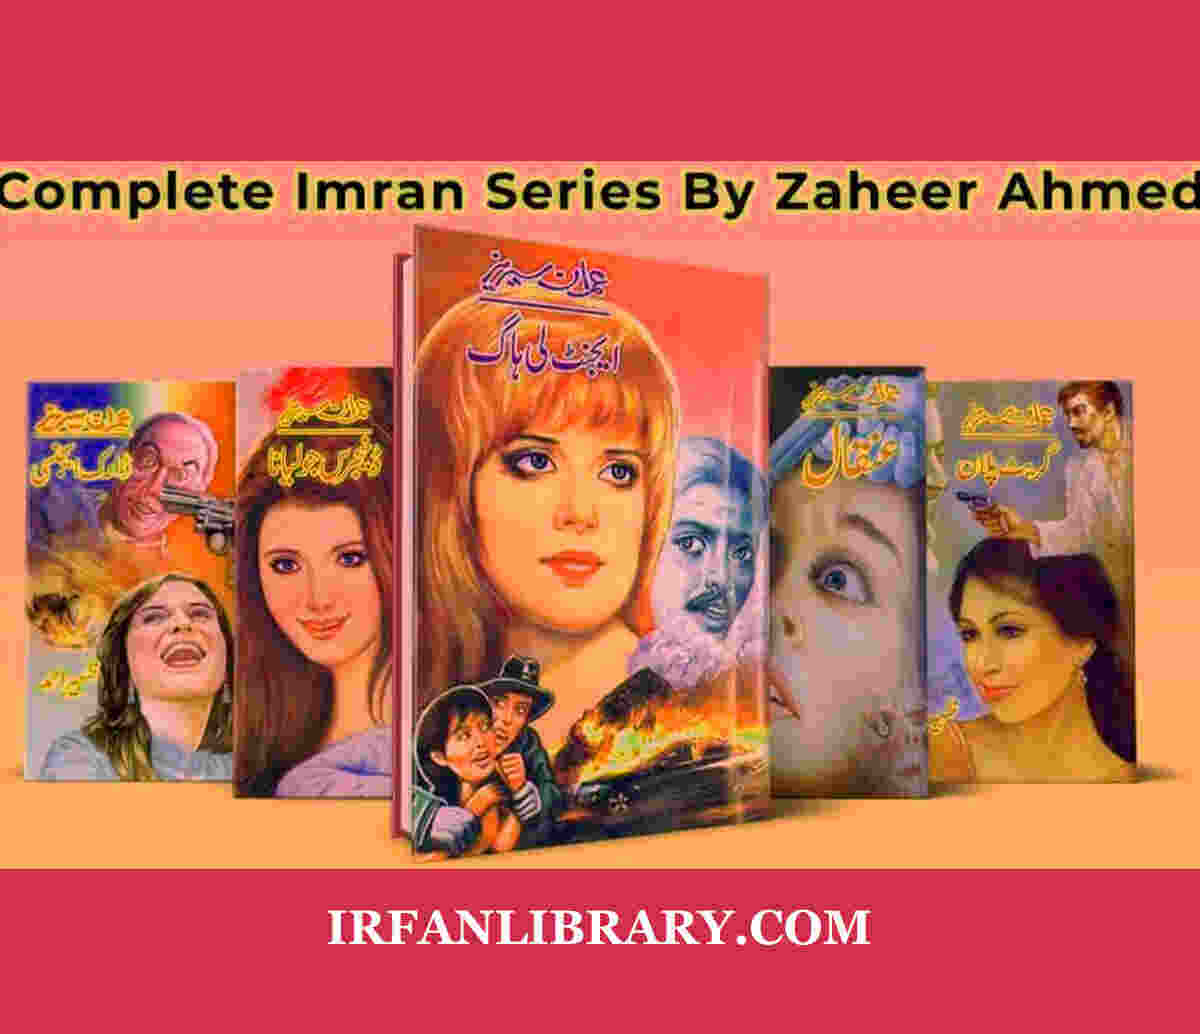 Imran Series by Zaheer Ahmad